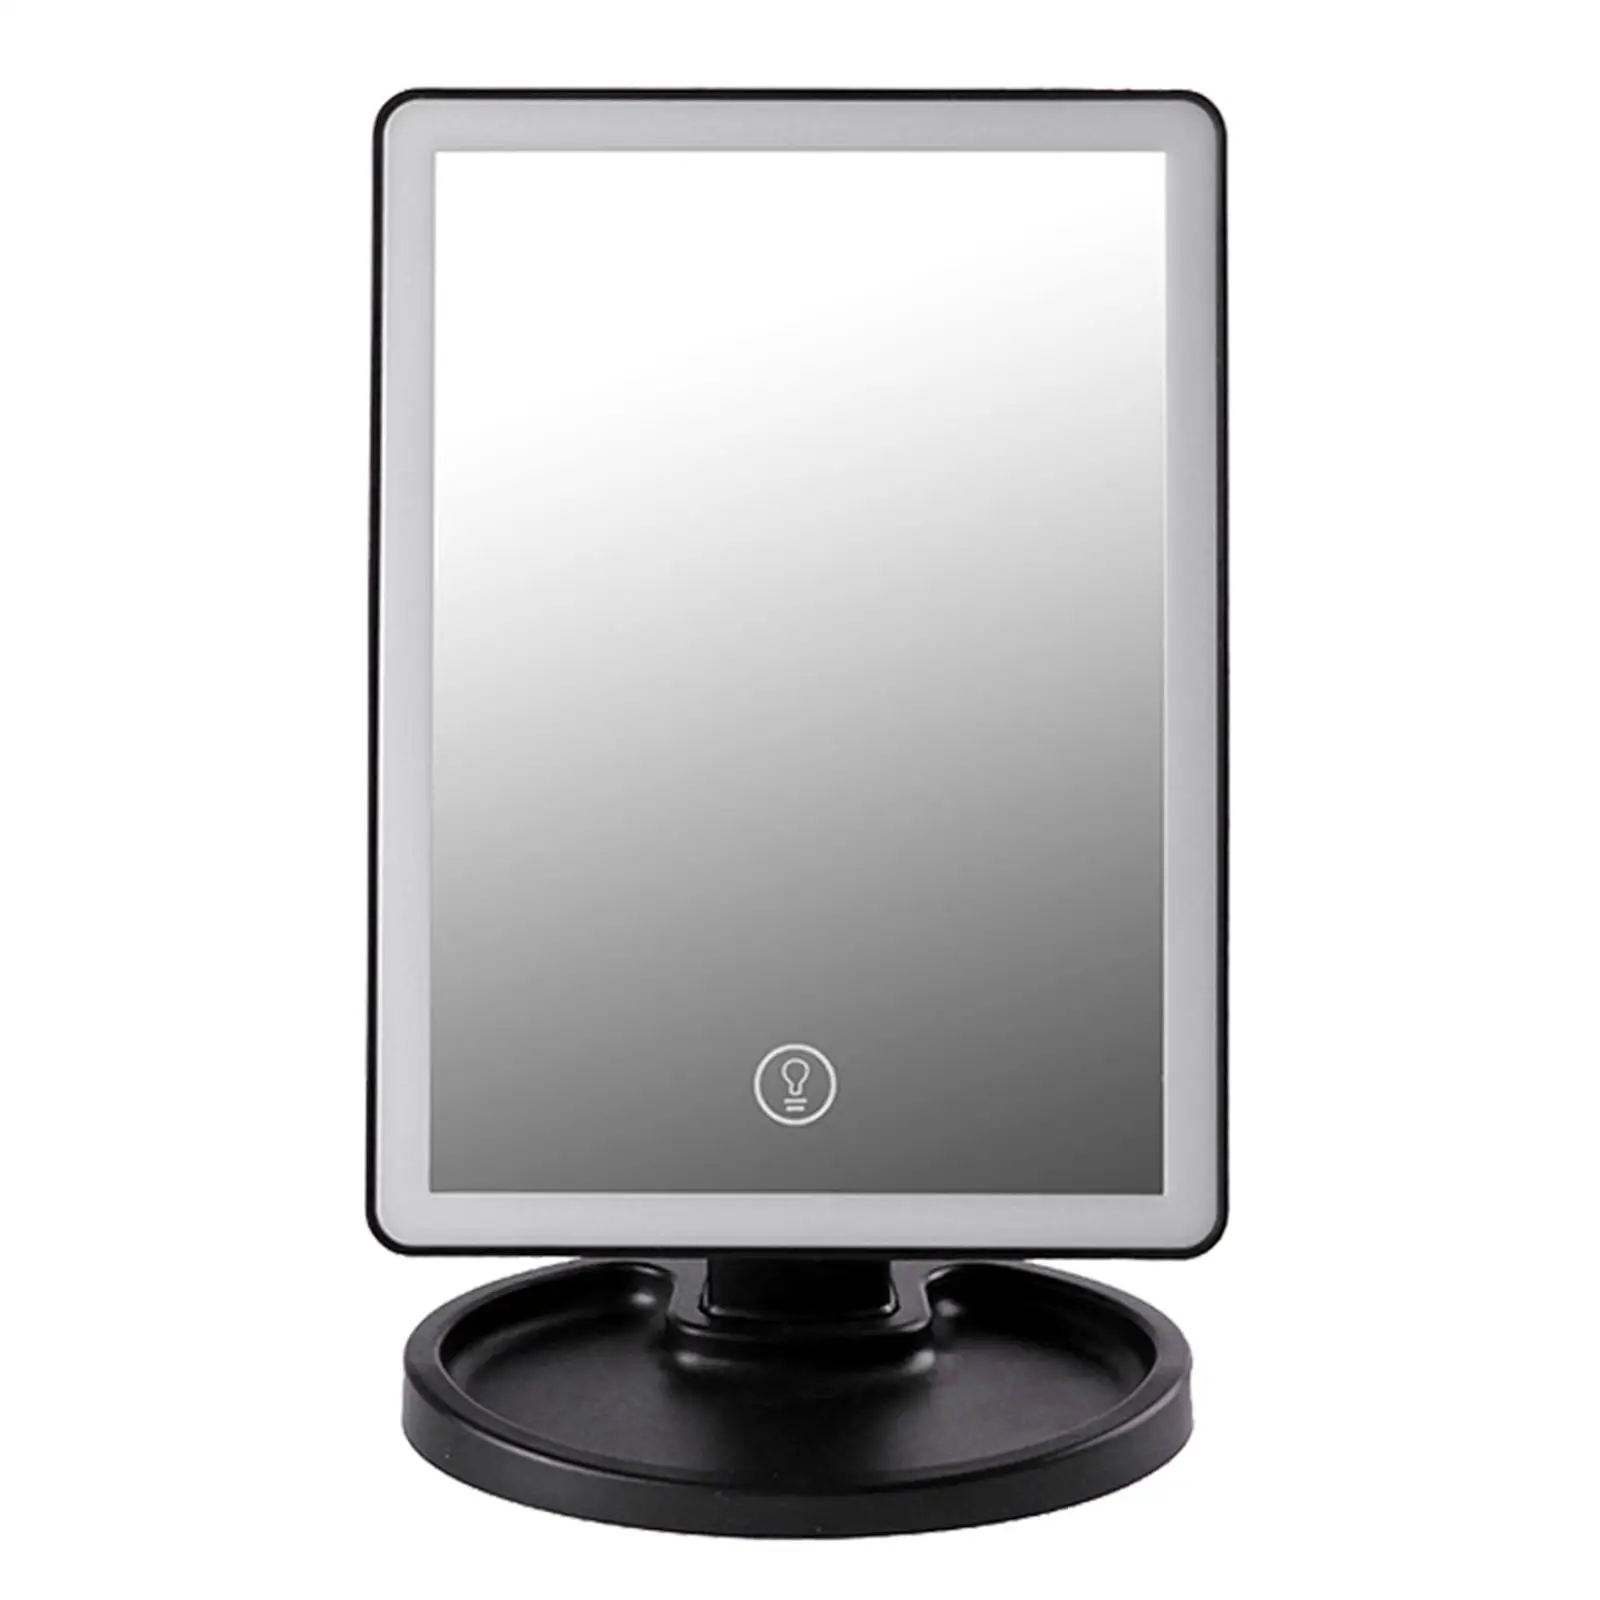 Makeup Mirror with Lights USB Adjustable Brightness Rotatable Portable for Shaving Dressing Table Vanity Desk Make up